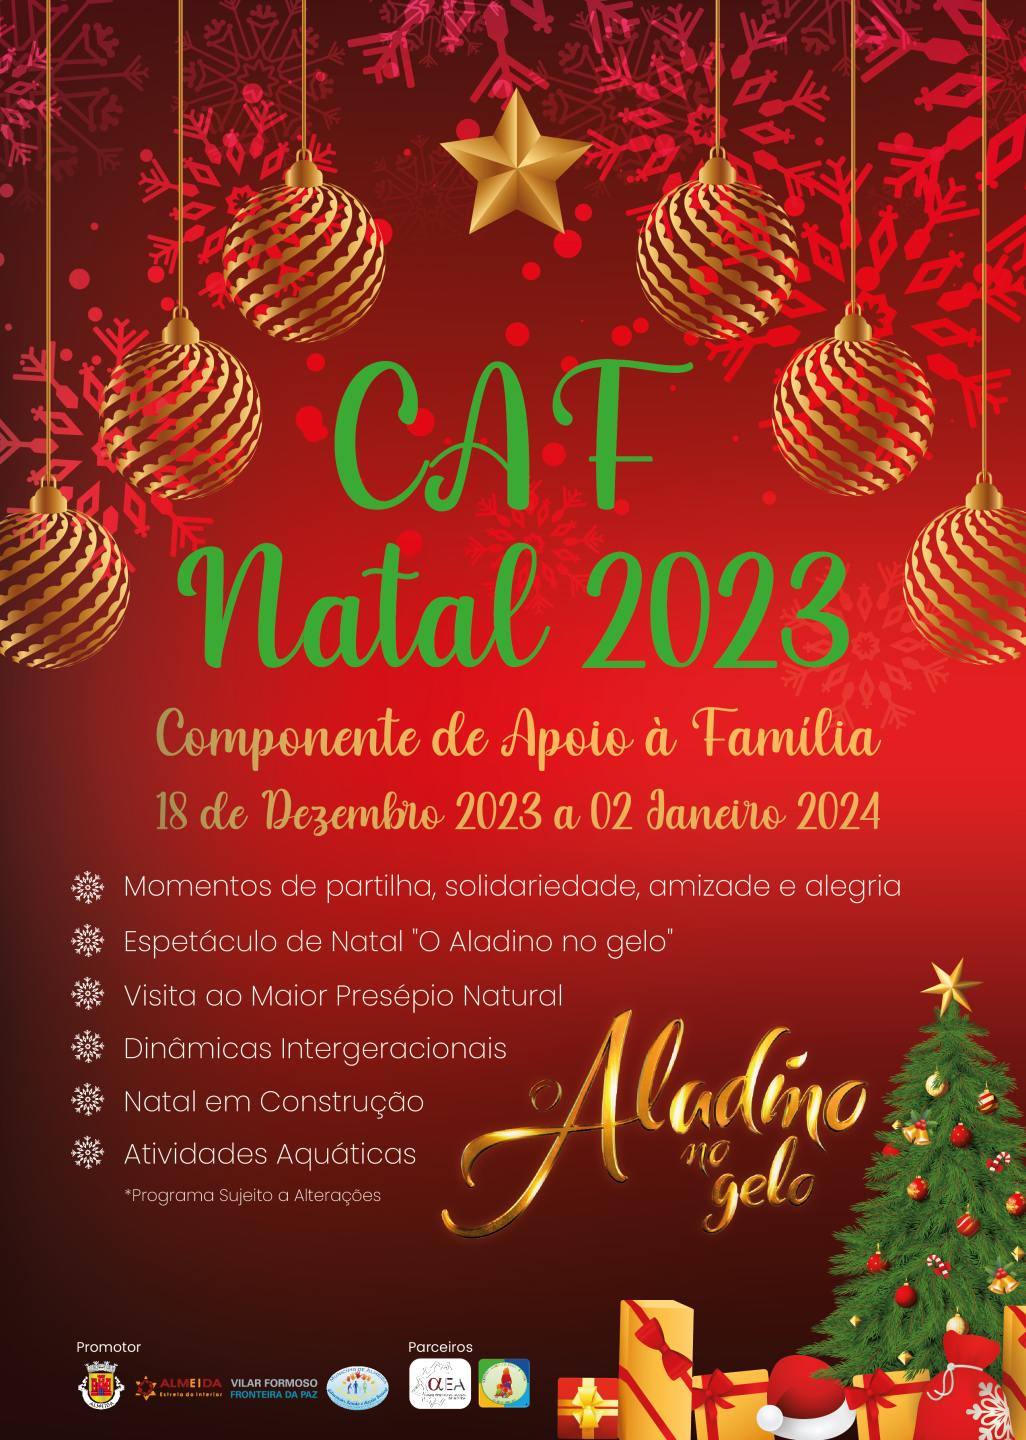 Caf Natal 2023 Prancheta 1 Cópia 2 (2)